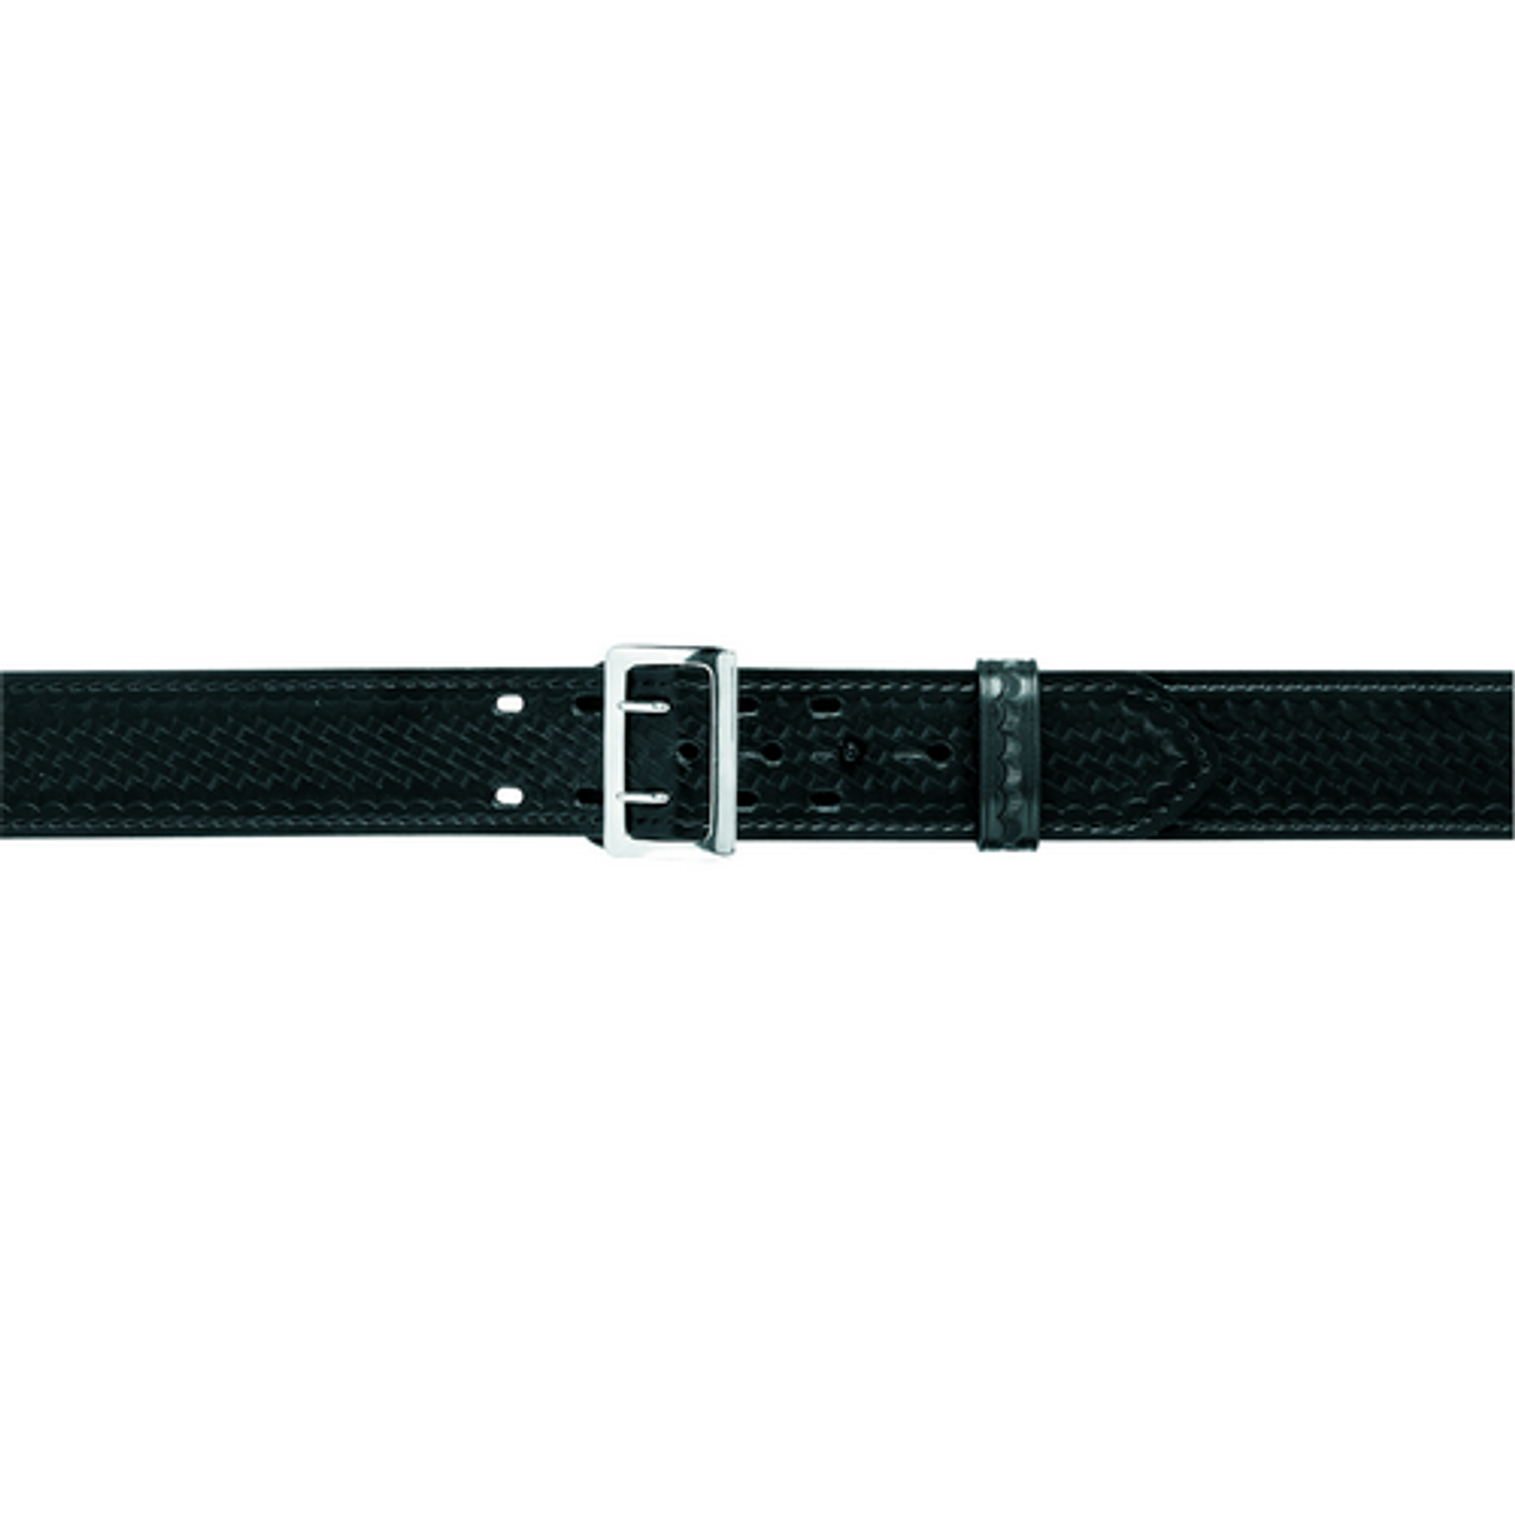 87 - Sam Browne Buckled Duty Belt, 2.25 (58mm) - KR87-42-9